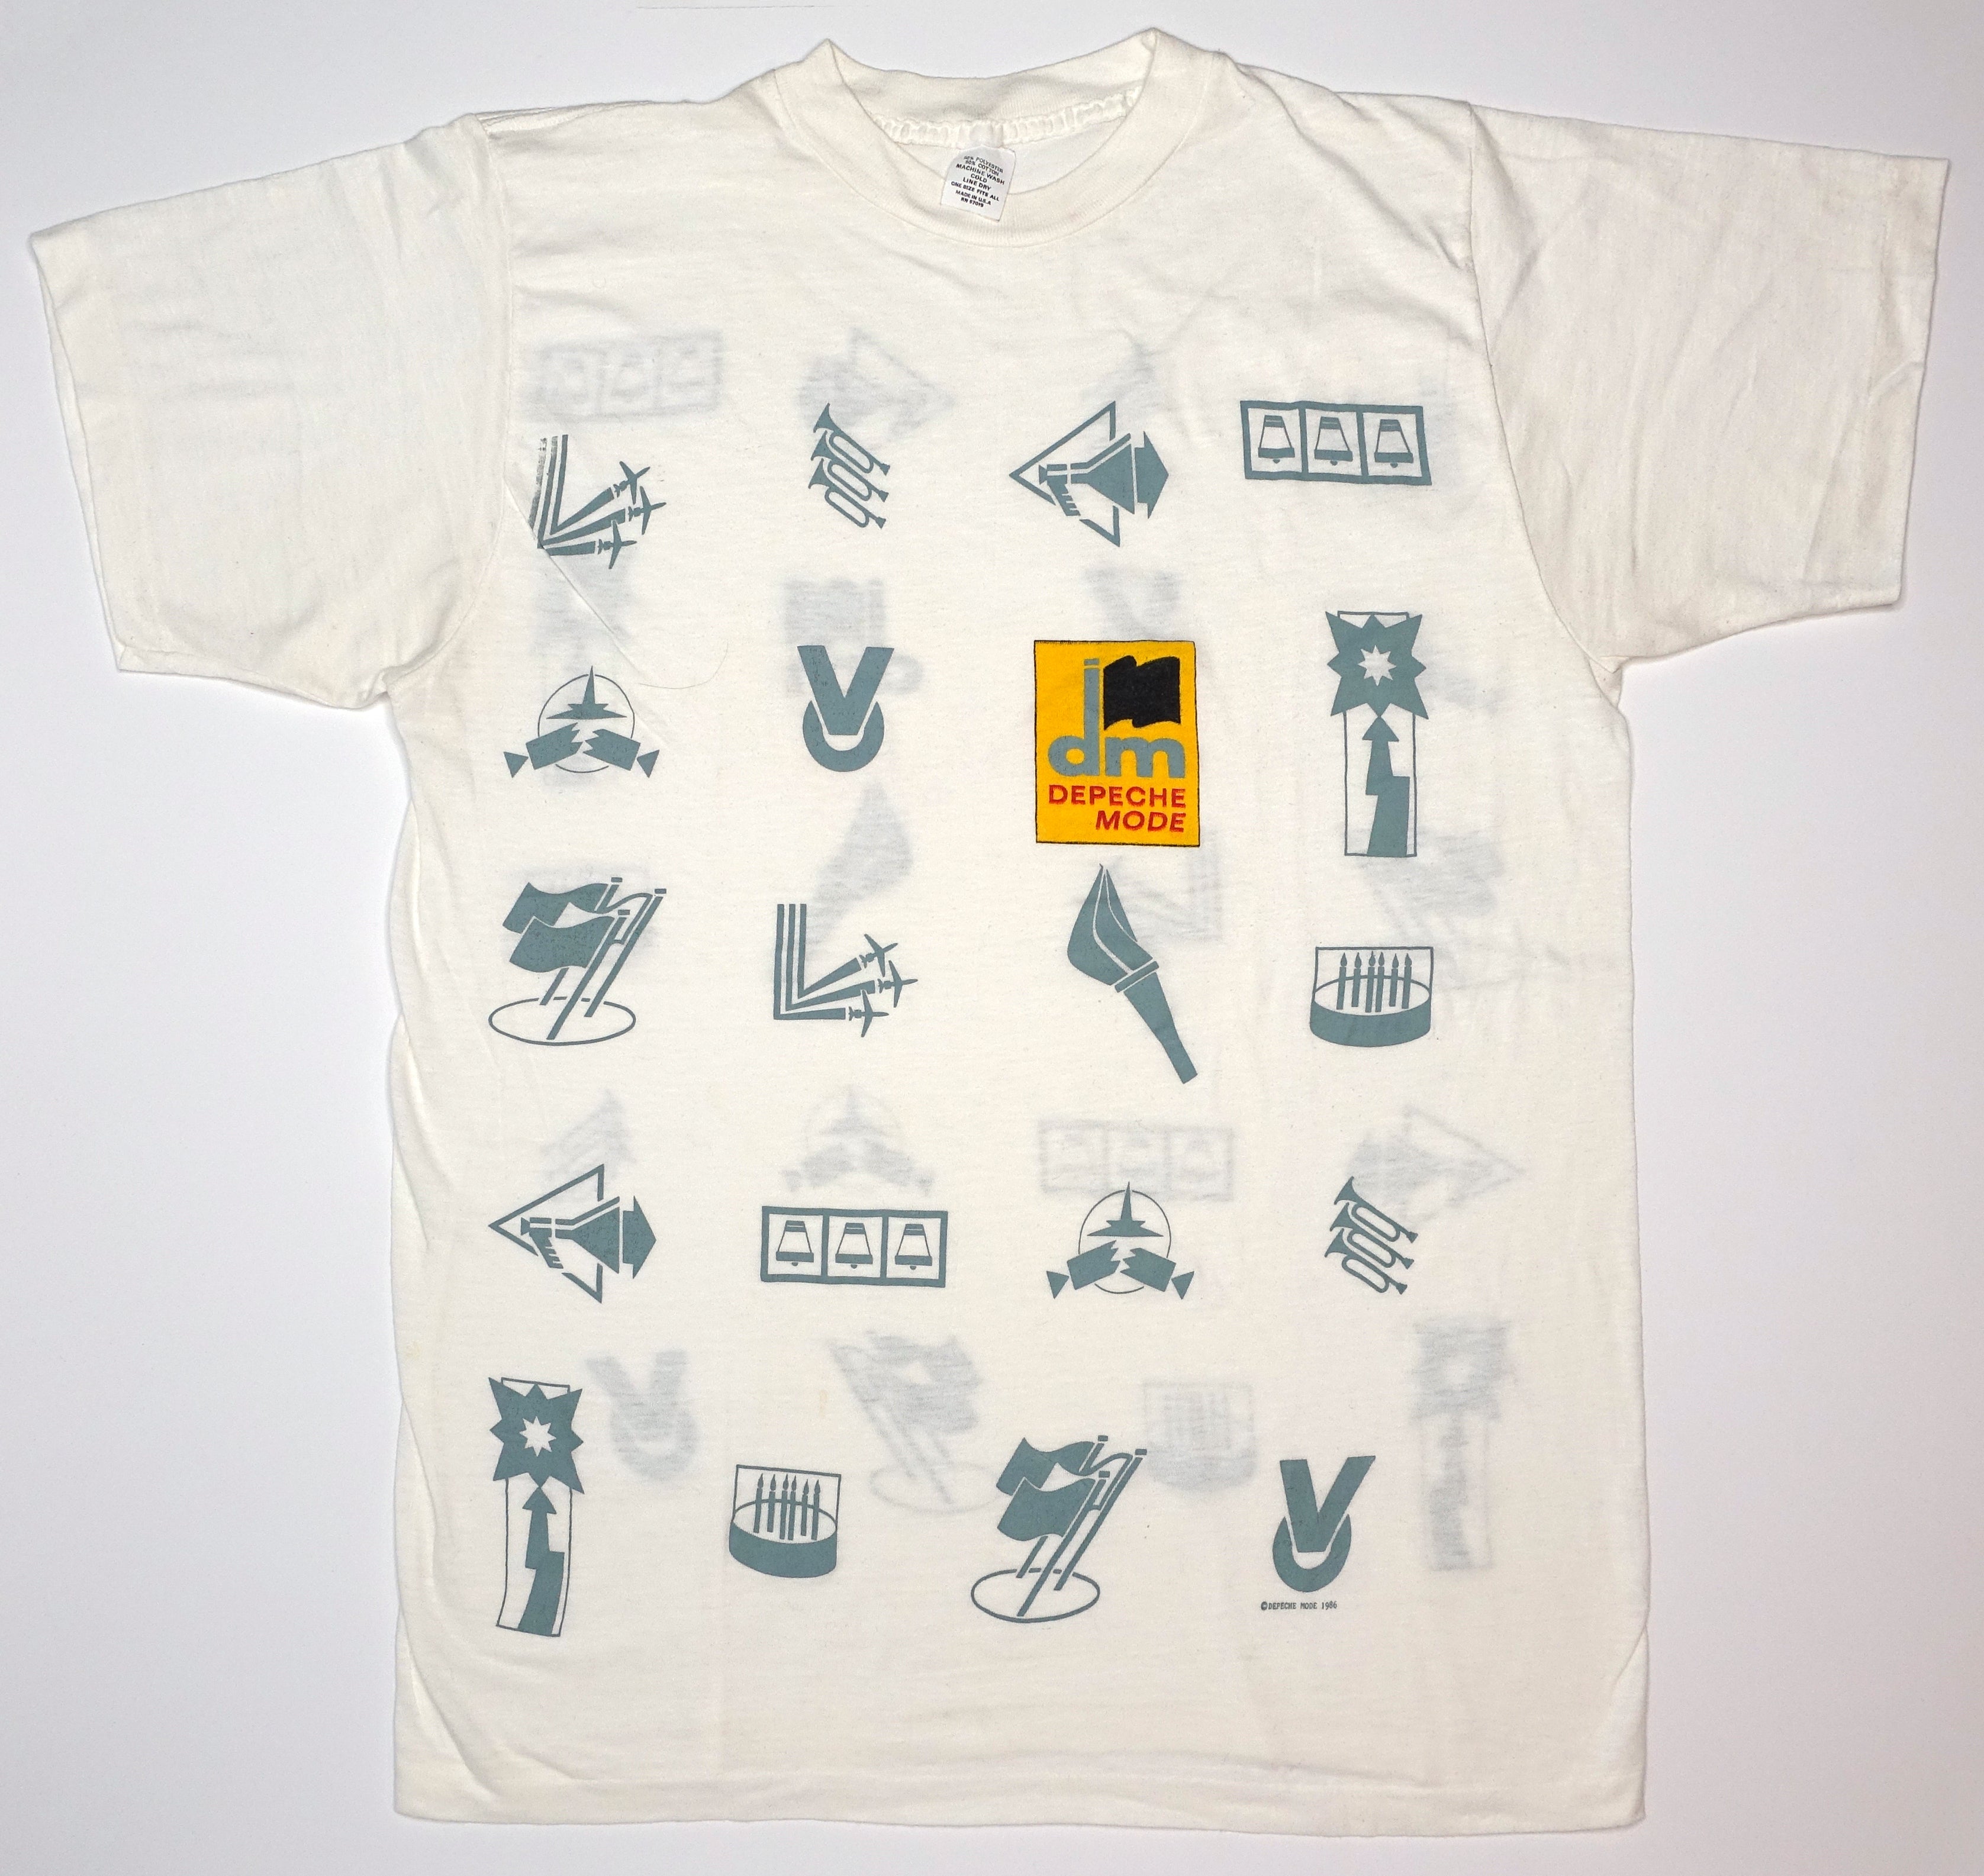 Depeche Mode – Black Celebration 1986 Tour Shirt Size Large